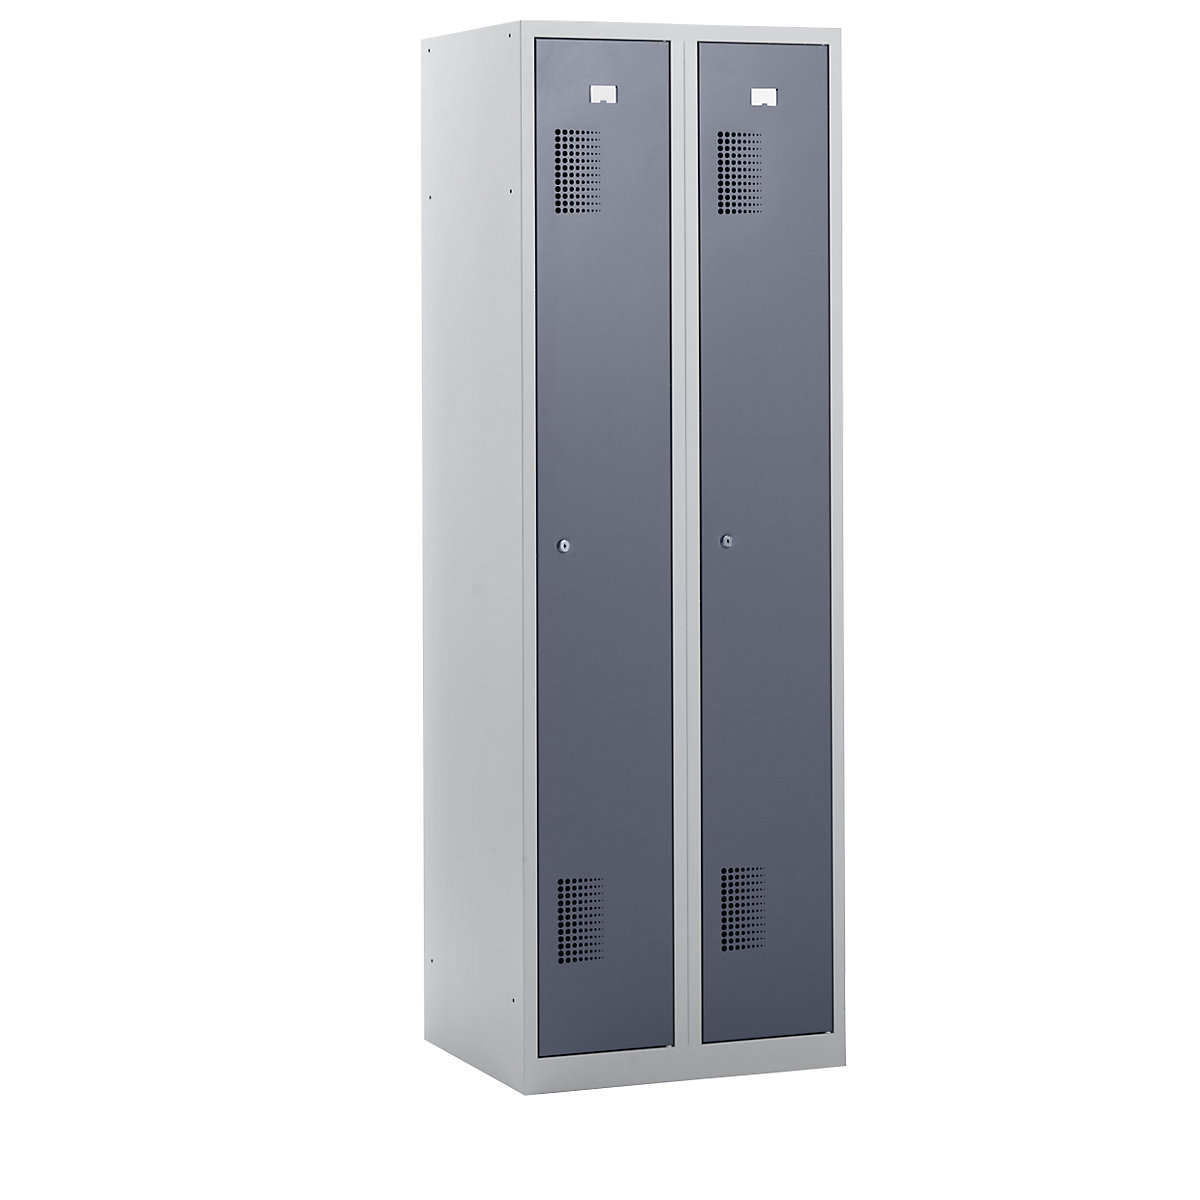 AMSTERDAM cloakroom locker – eurokraft basic, height 1800 mm, width 600 mm, 2 x 298 mm wide compartments, with cylinder lock, light grey body, basalt grey doors-11